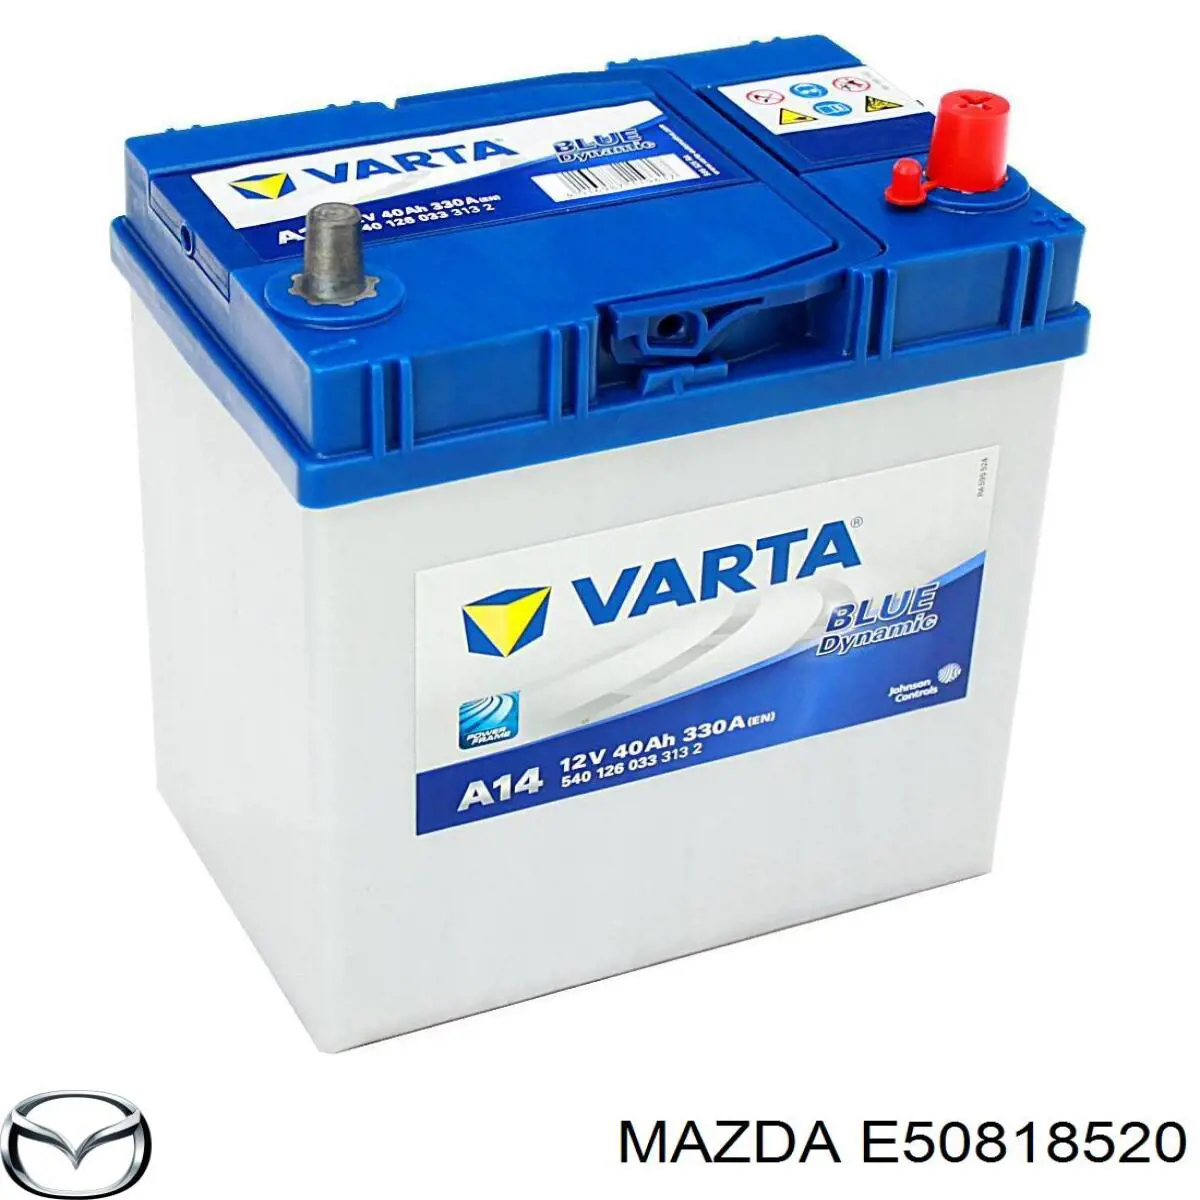 E50818520 Mazda акумуляторна батарея, акб